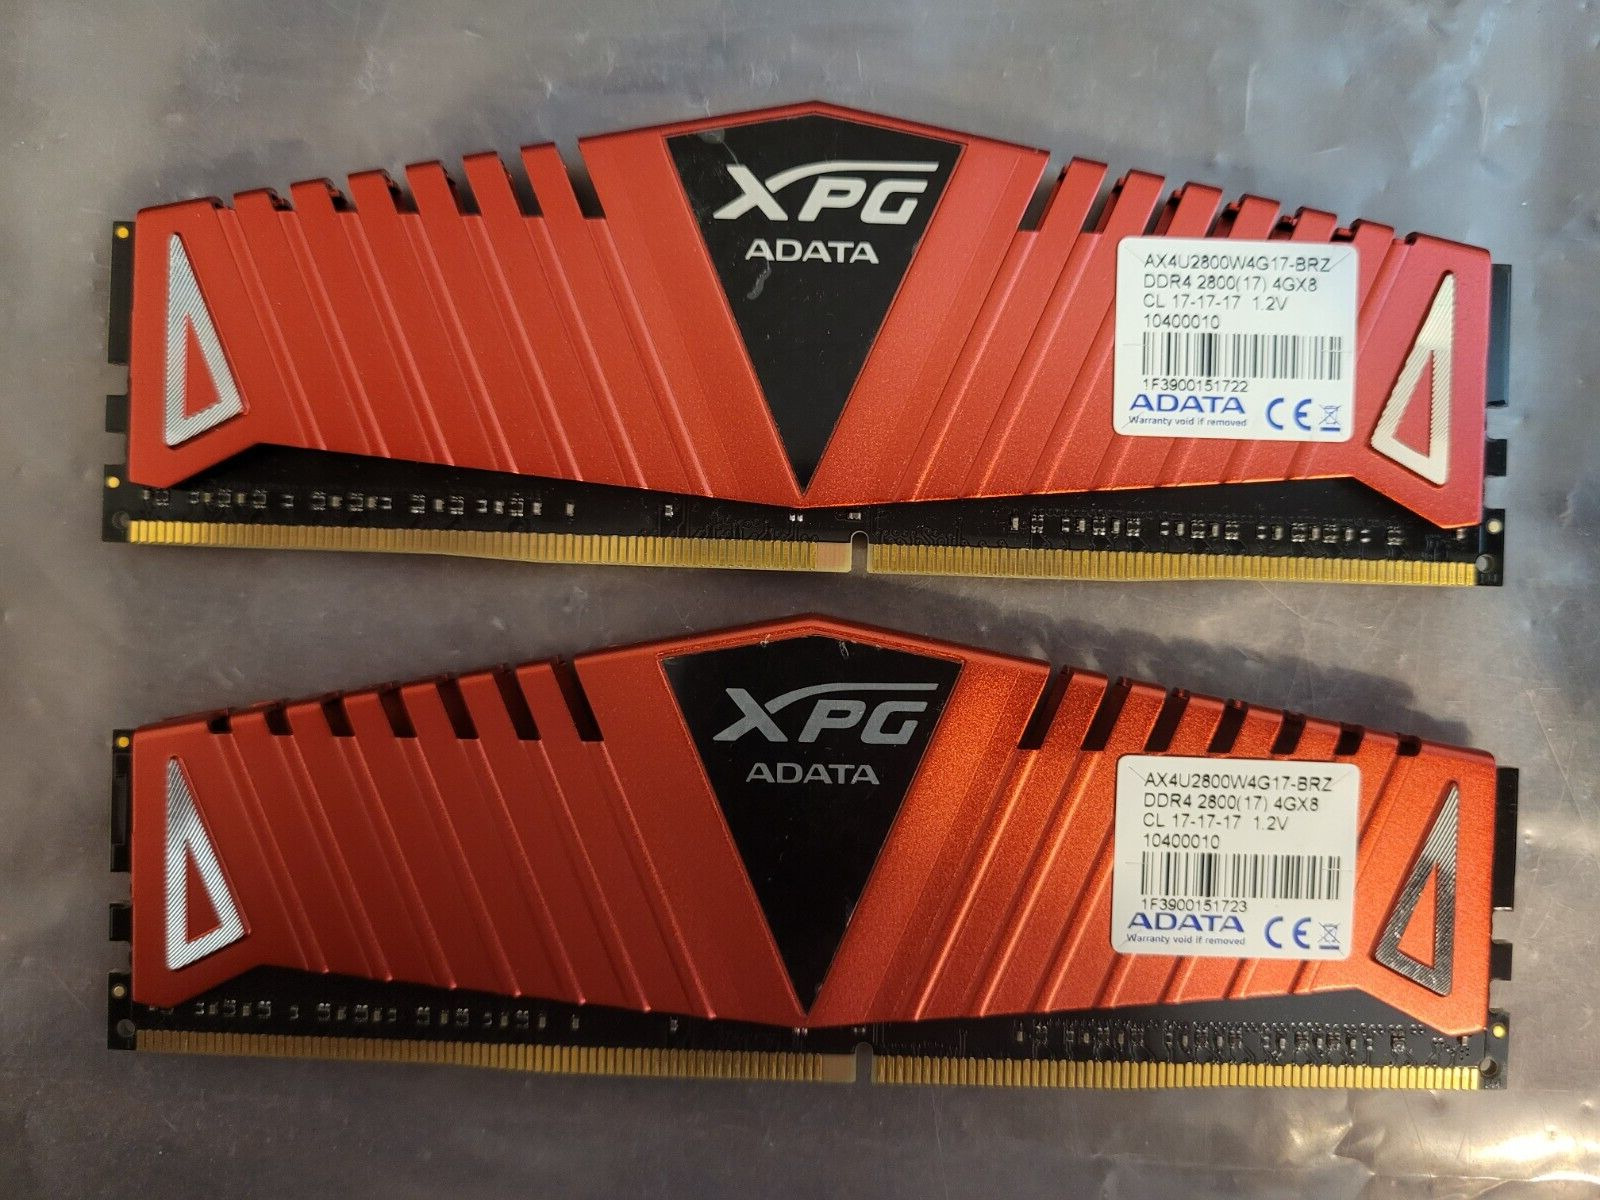 Adata XPG 8GB (2x4GB) DDR4-2800MHz PC4-22400 Desktop Memory Ram Set